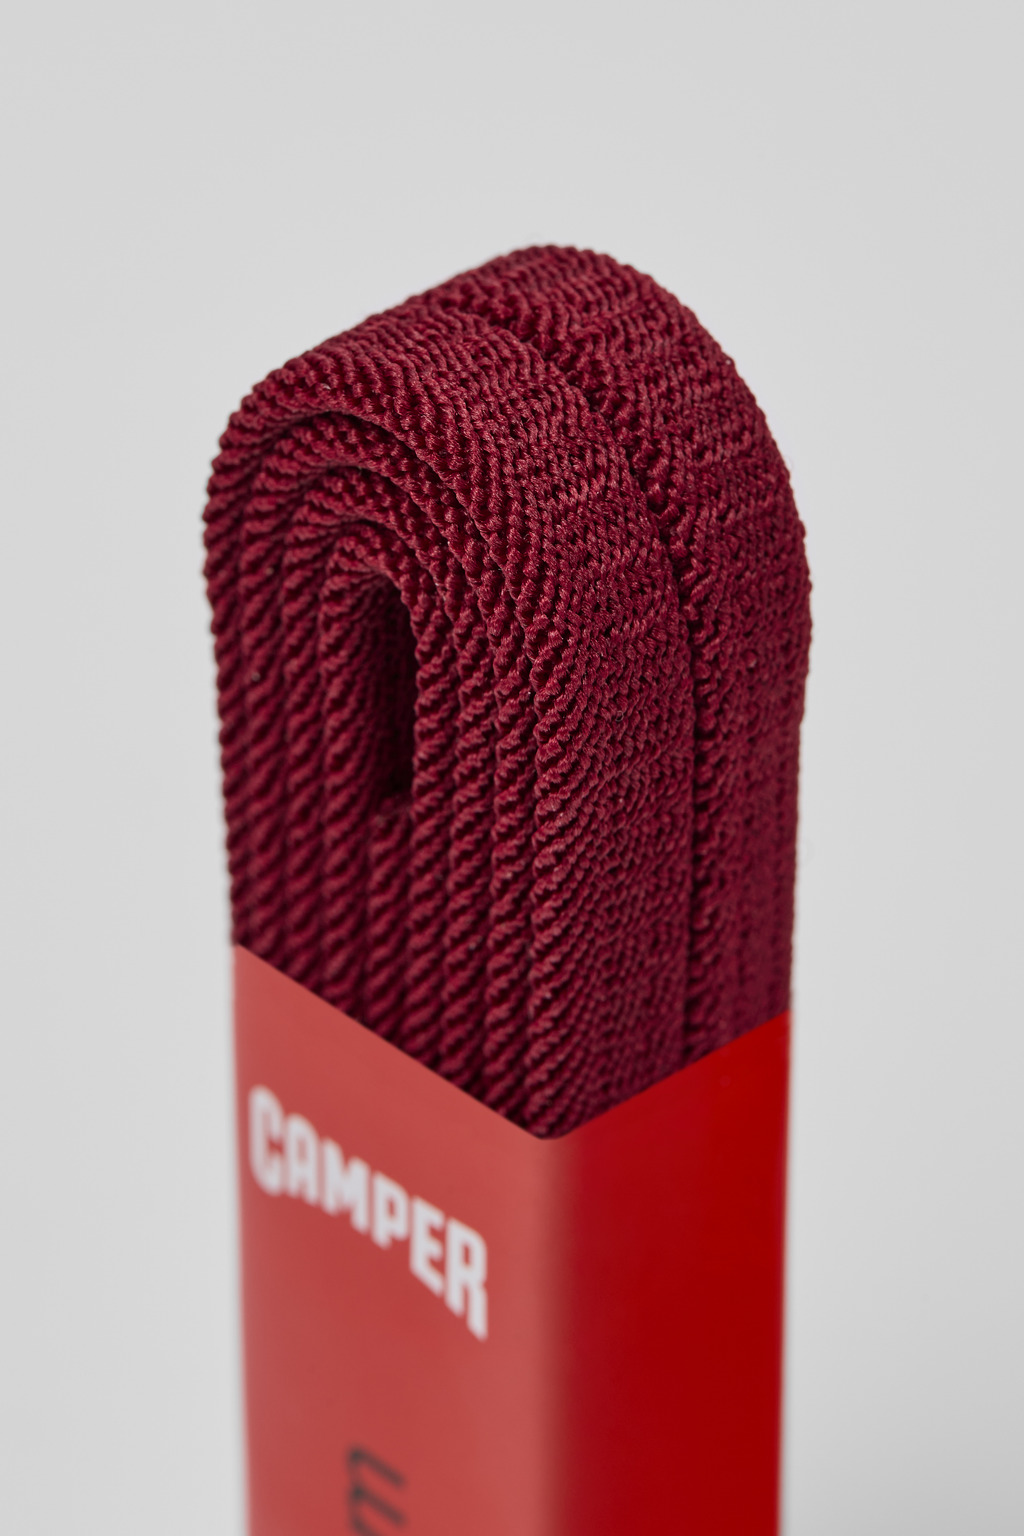 Buy Camper, ELASTICO PEU 77 cm Elastic Laces, black » at MBaetz online